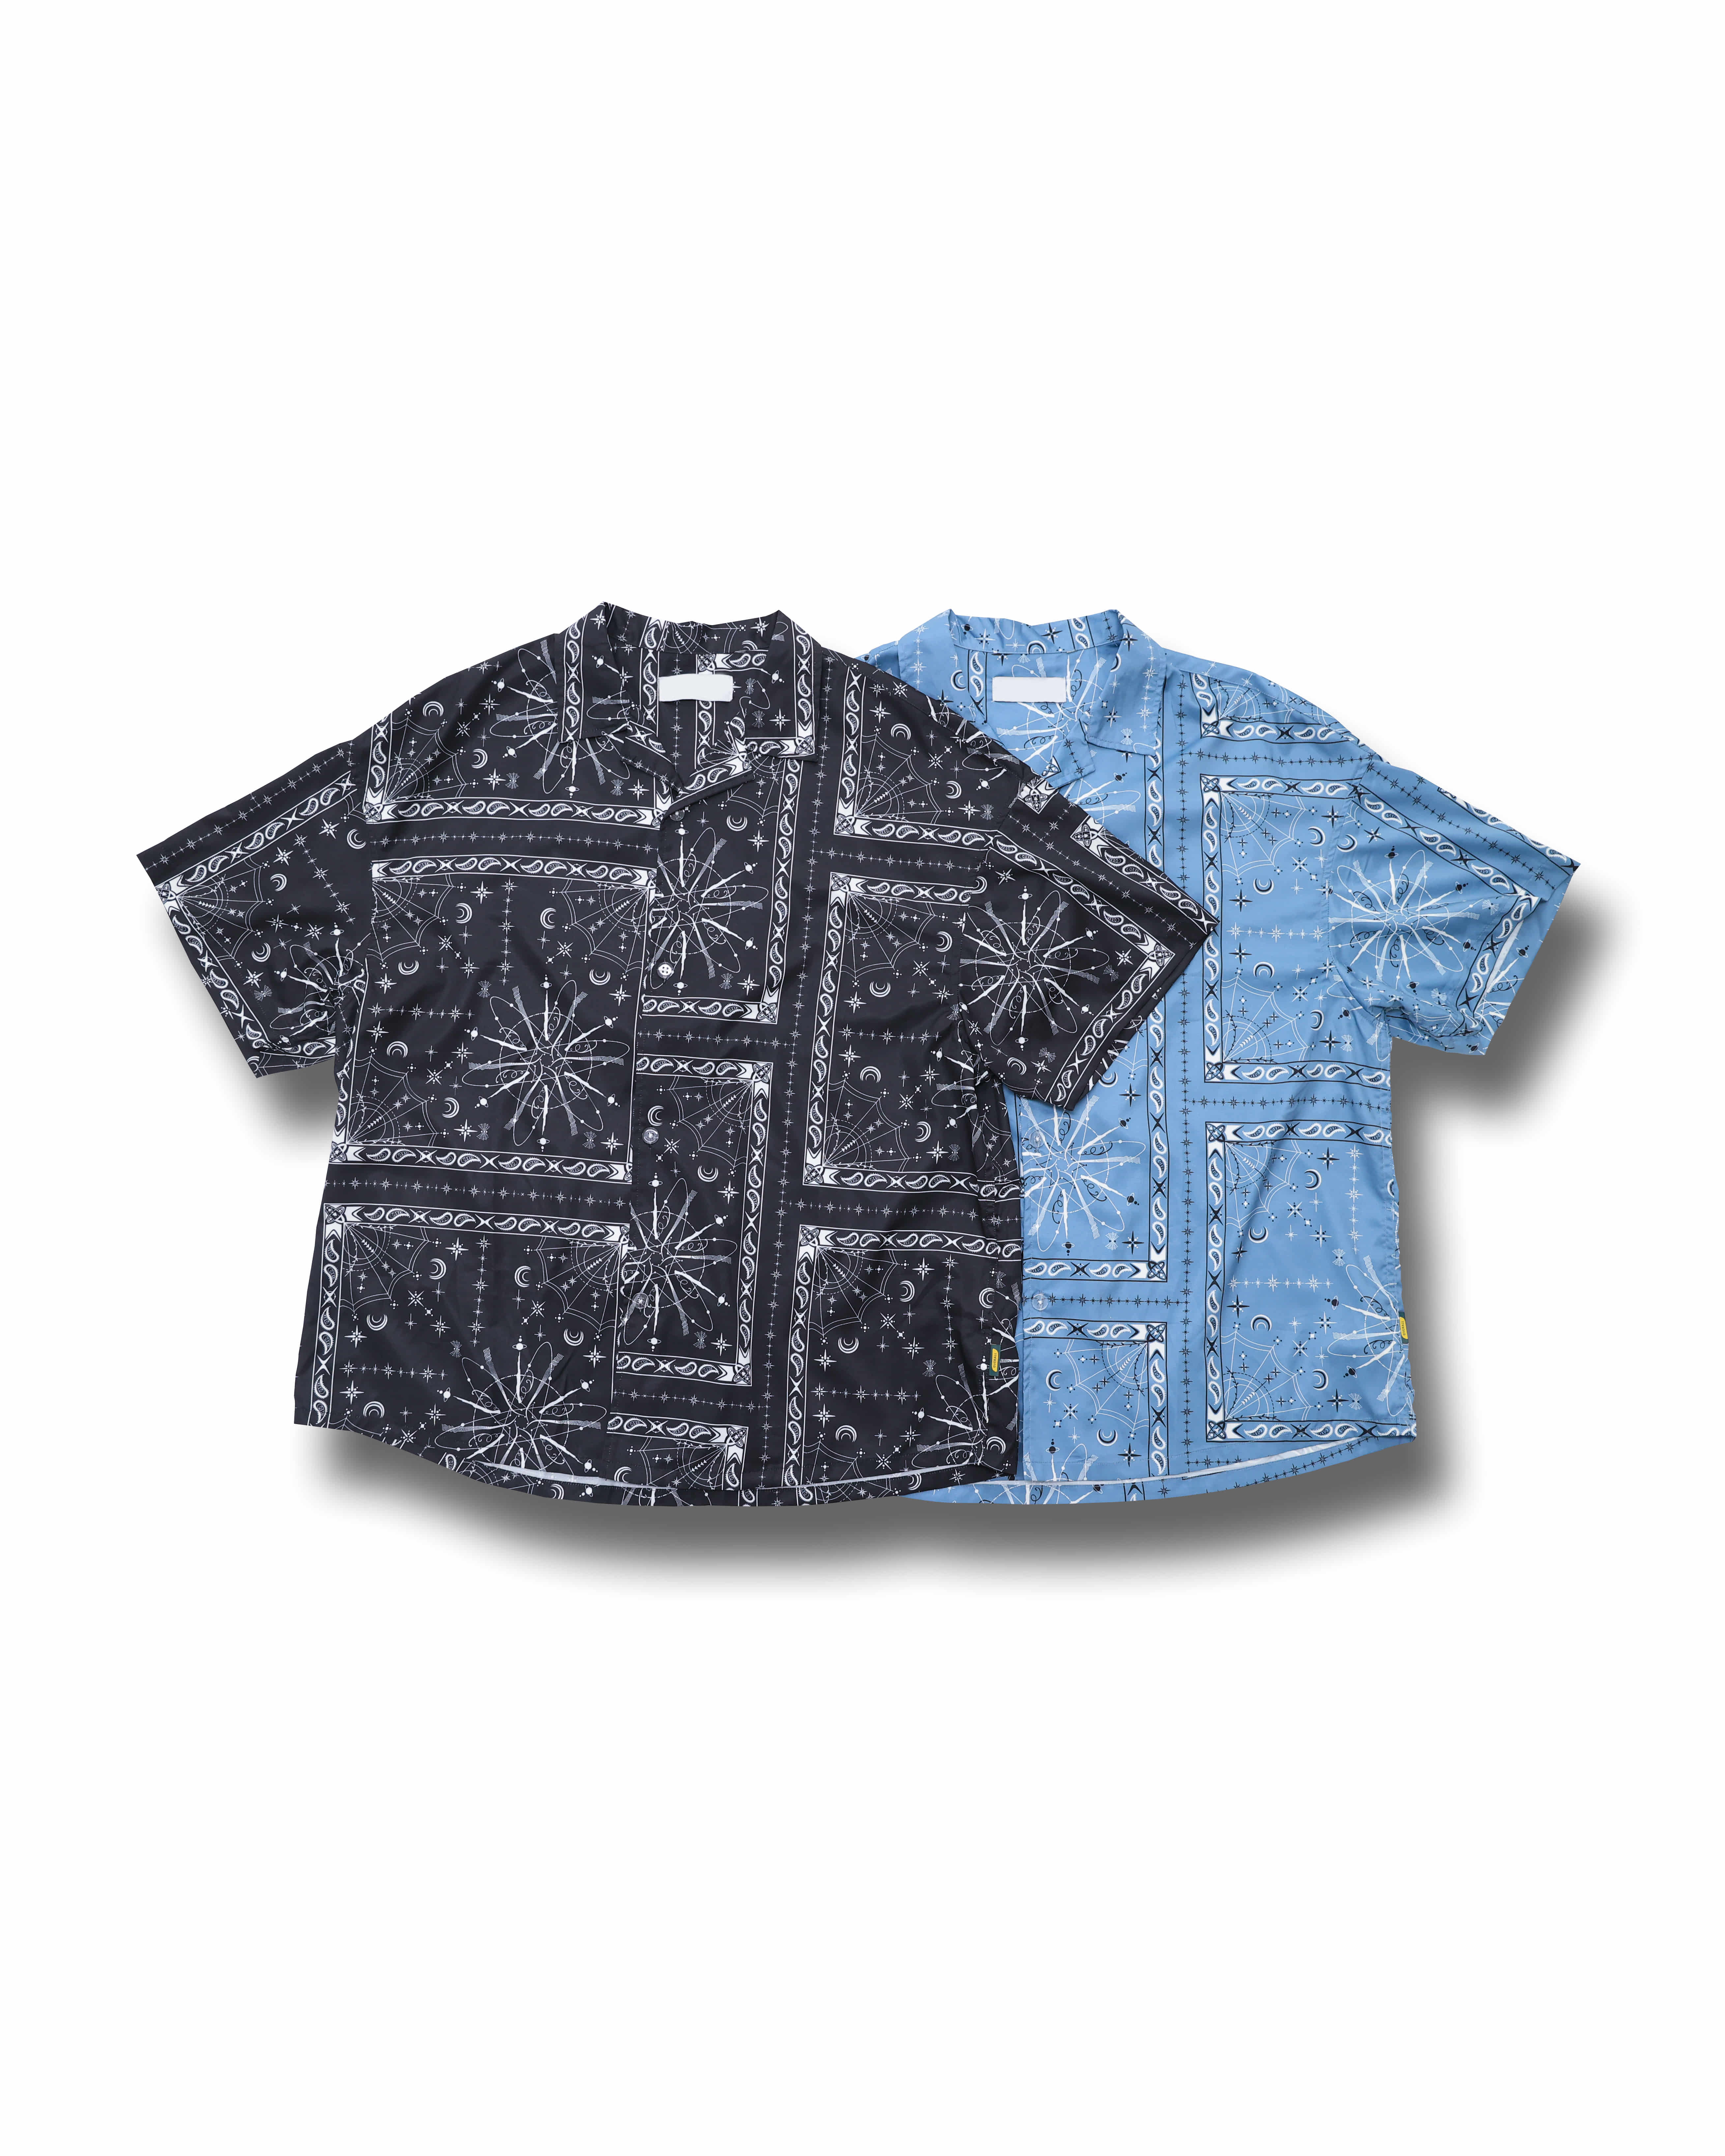 PR Flow Paisley Over Shirts (Black/Blue)